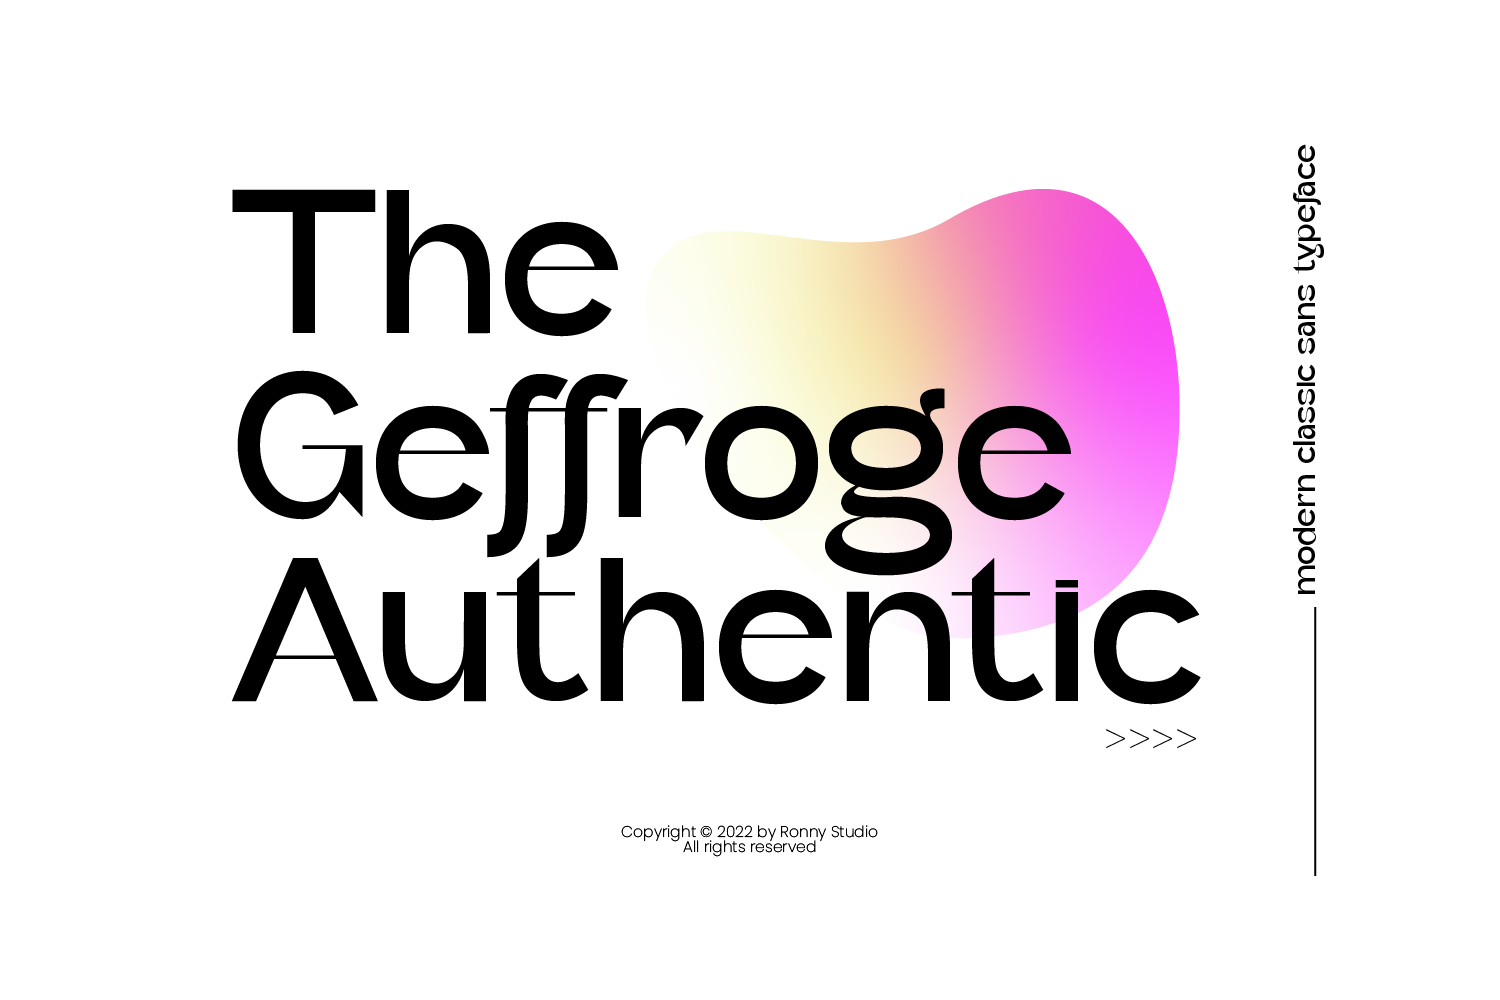 Geffroge Authentic Free Font